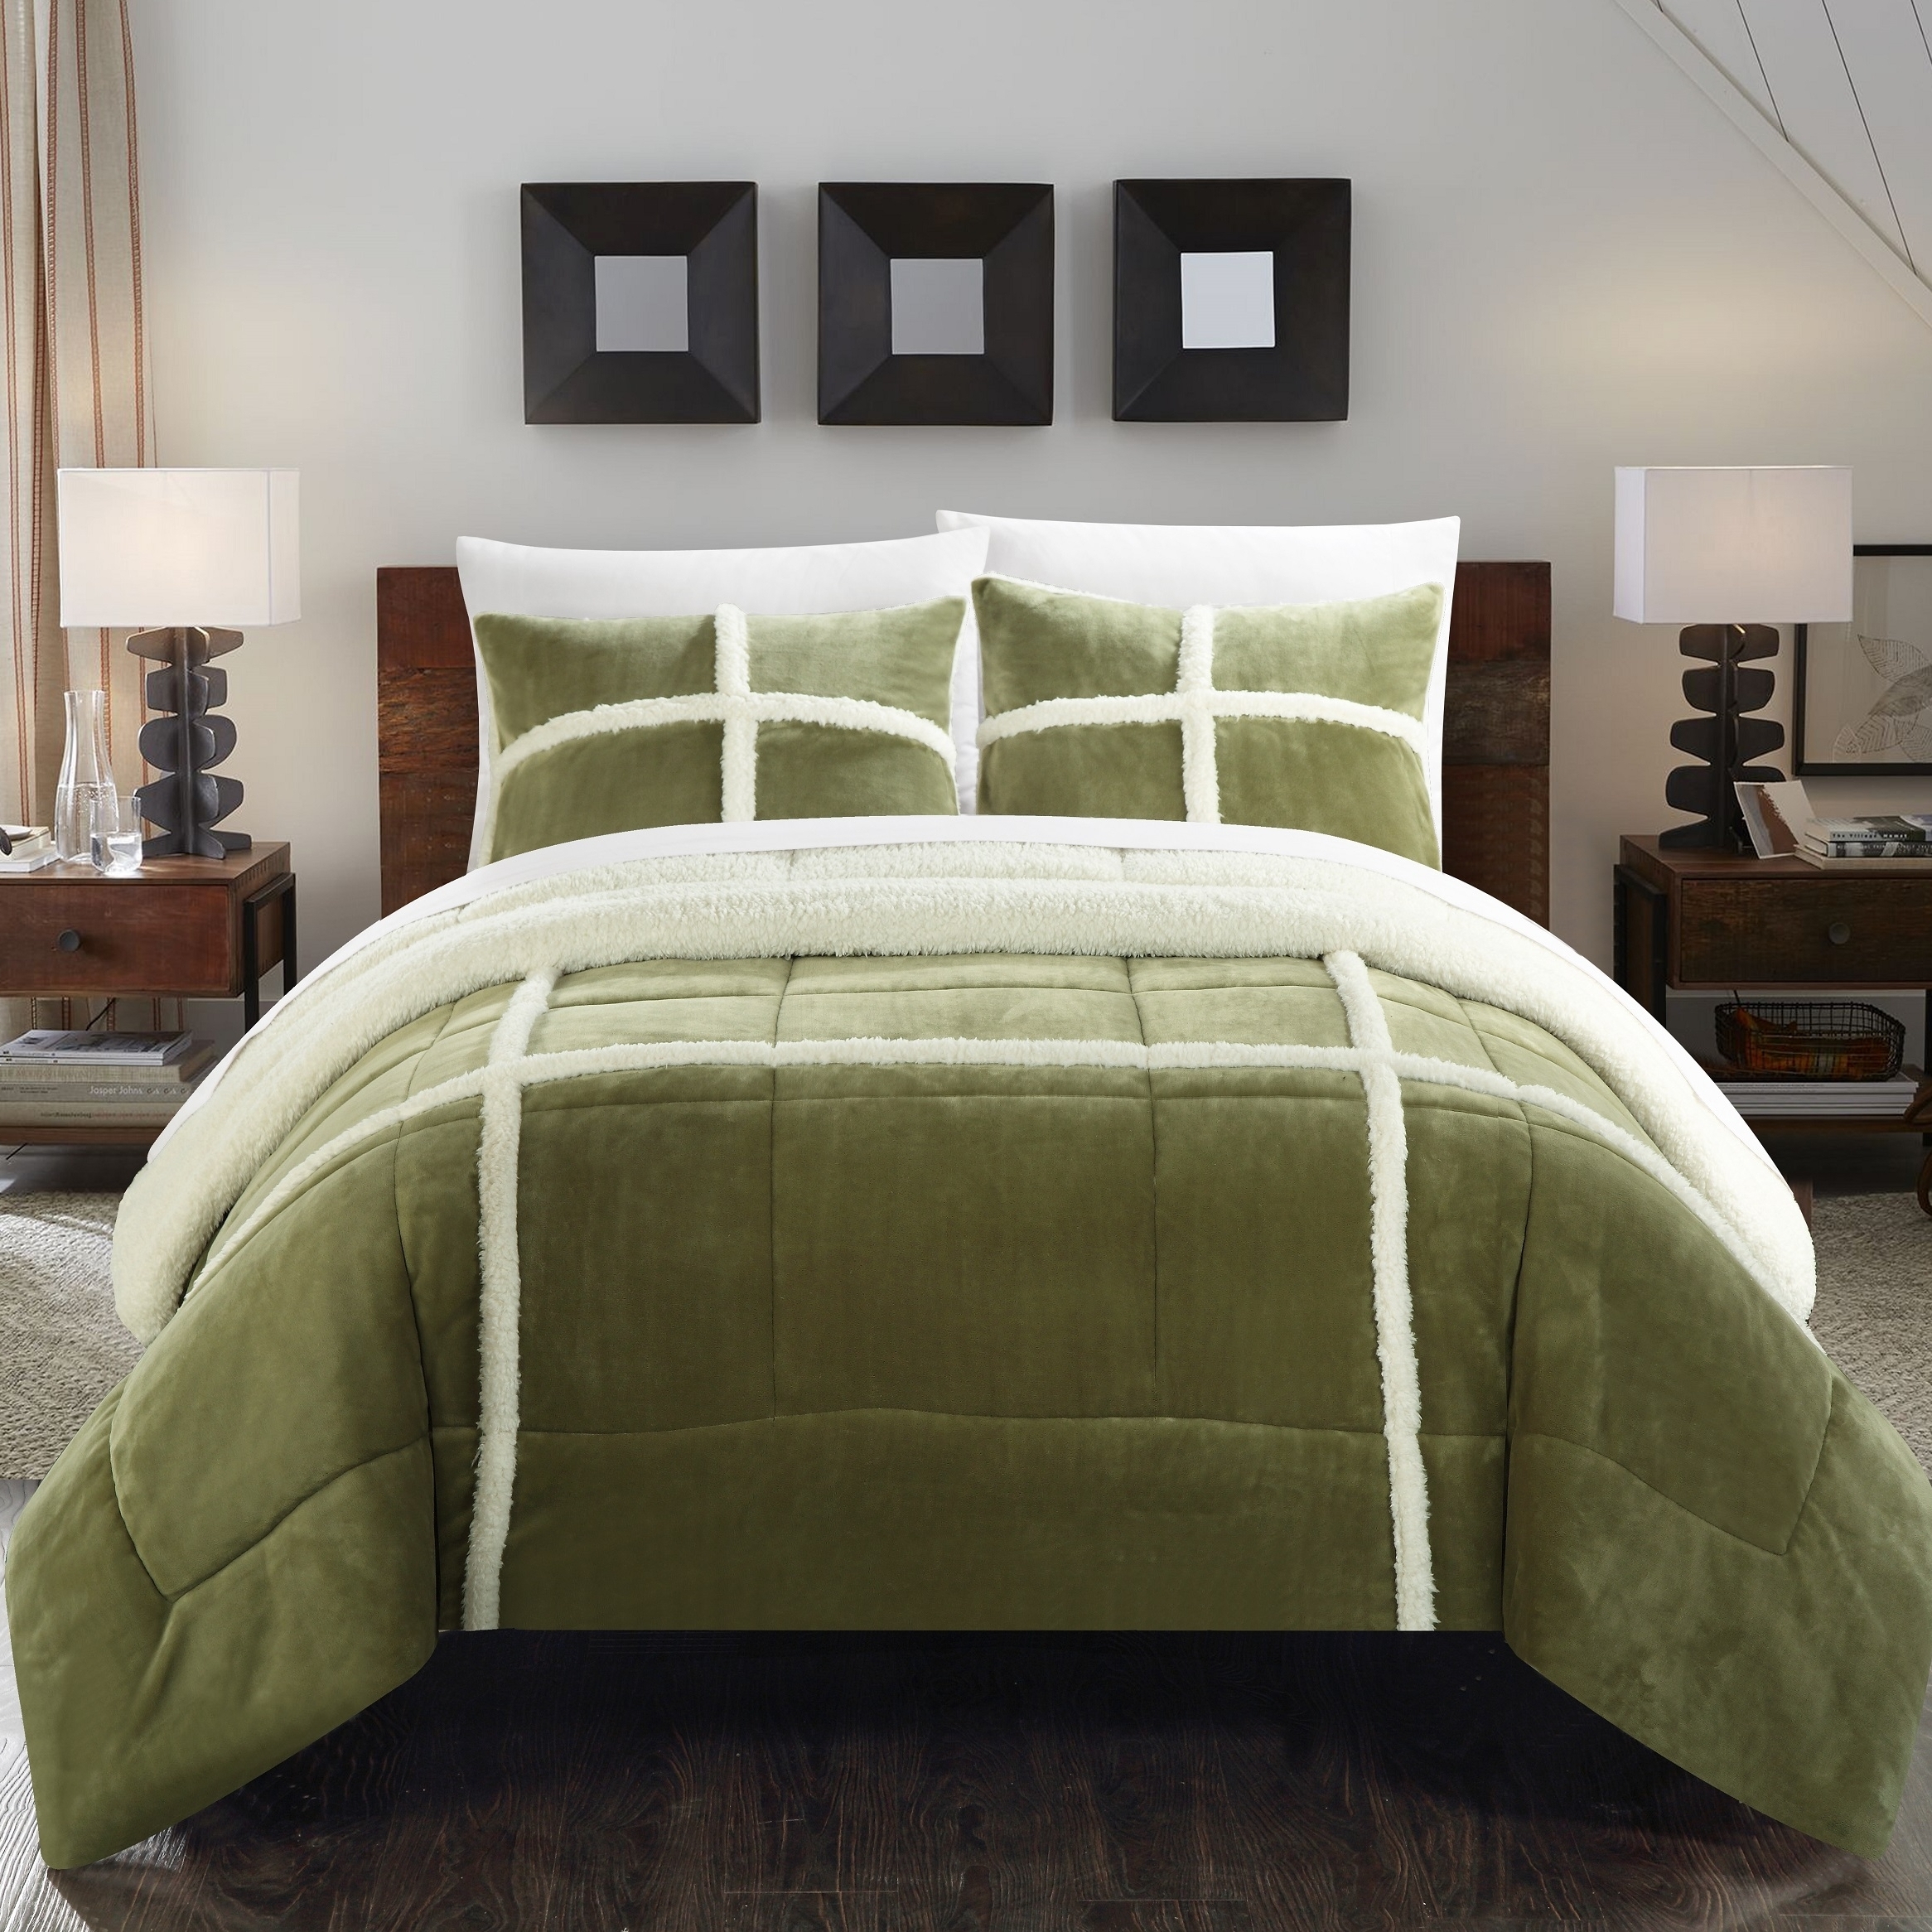 Chloe 3 Or 2 Piece Comforter Set Ultra Plush Micro Mink Sherpa Lined Bedding â Decorative Pillow Shams Included - Green, King - 3 Piece